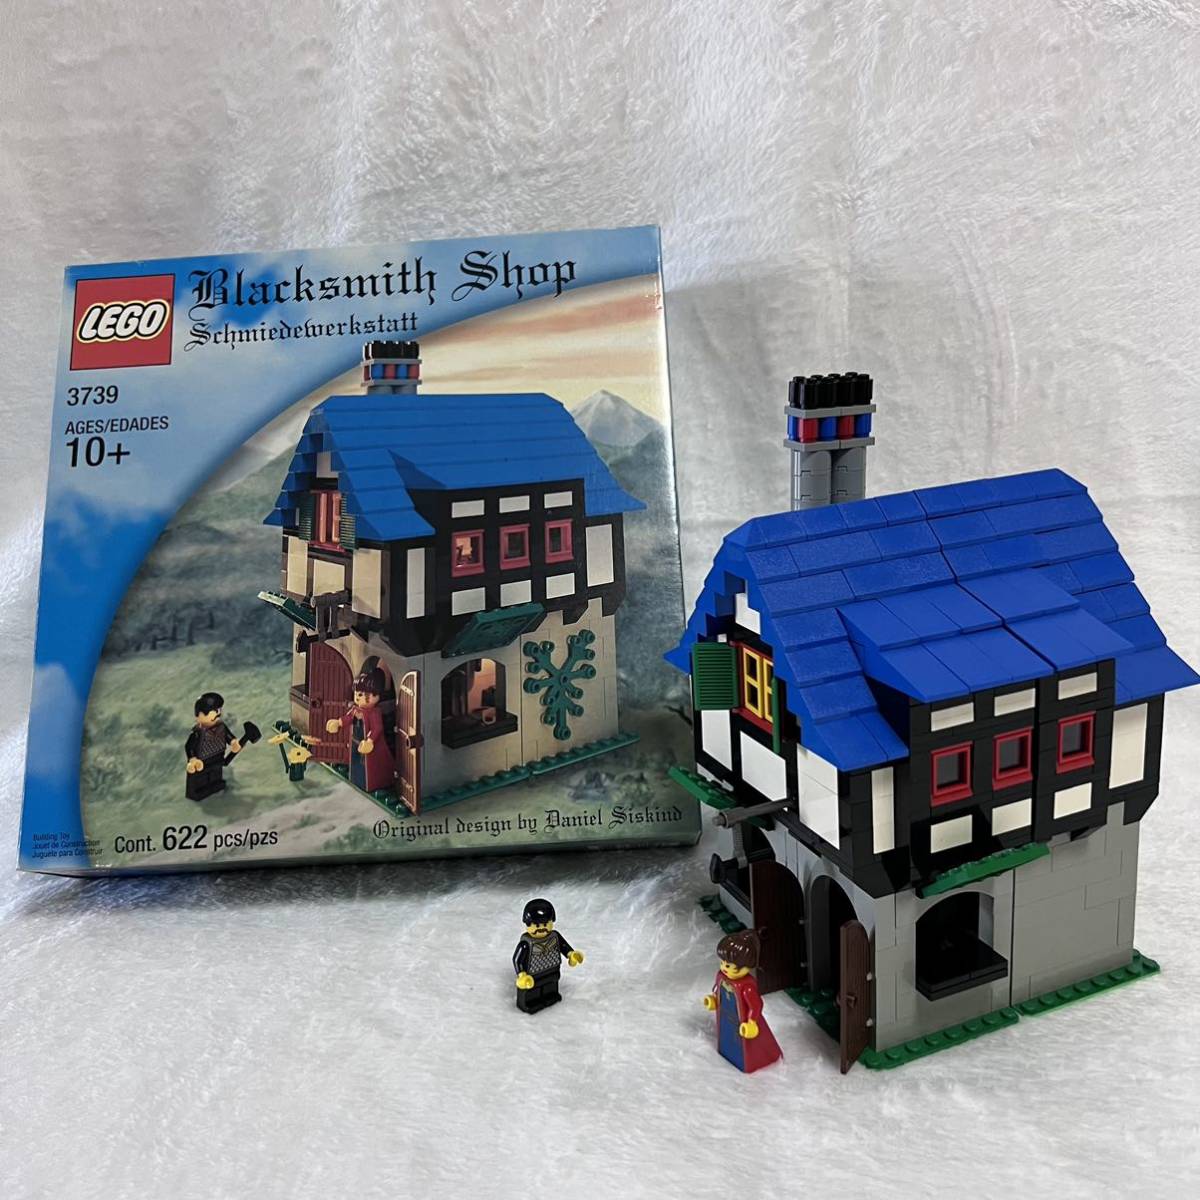 LEGO 3739 Blacksmith Shop 鍛冶屋 お城シリーズ オールドレゴ 中古